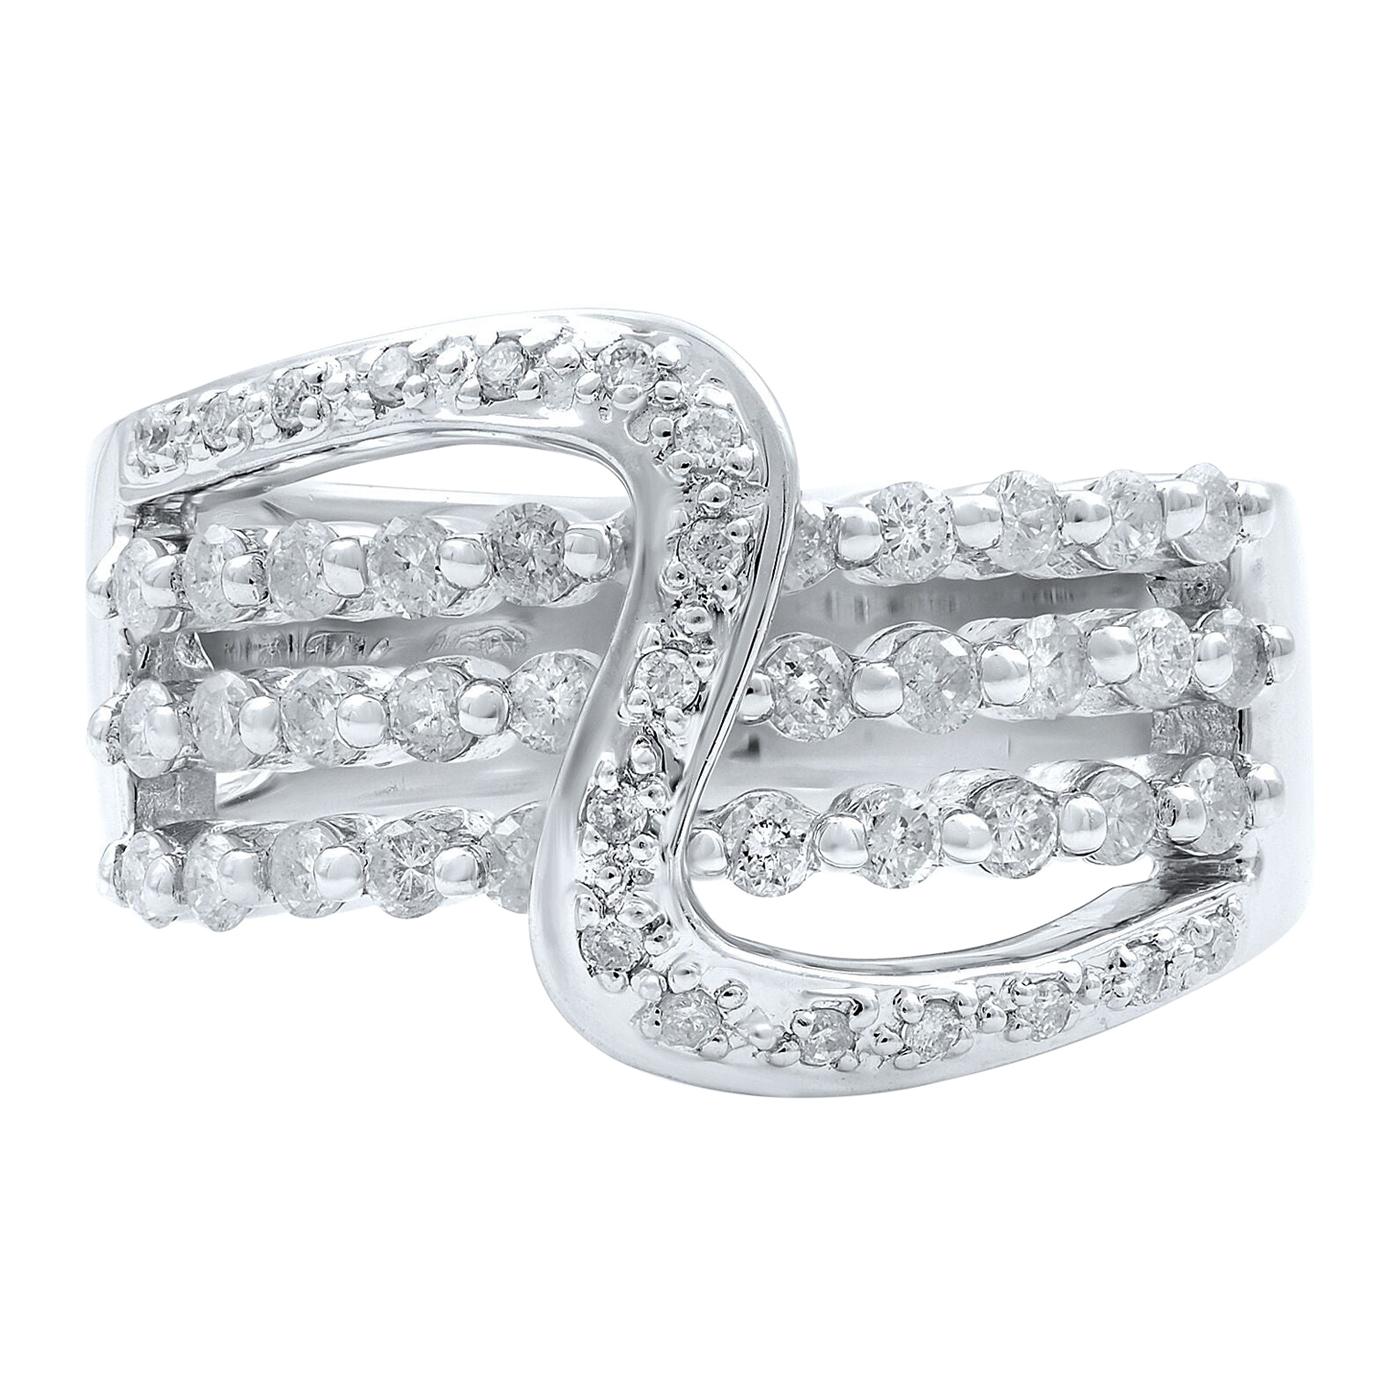 Rachel Koen Diamond Ladies Ring 14K White Gold 0.75 Cttw Size 7.5